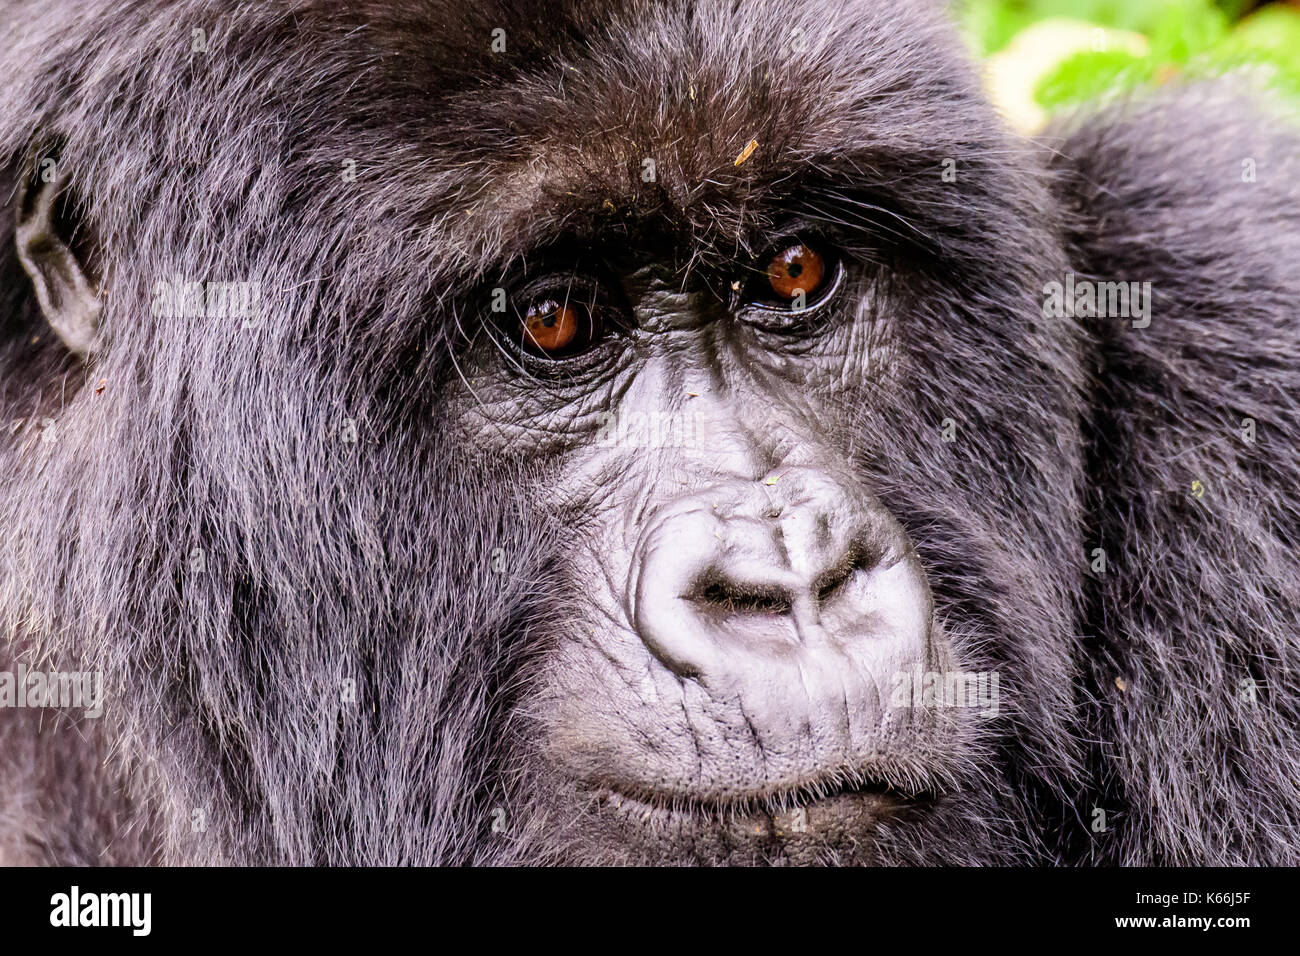 Cara inteligente de una hembra de gorila de montaña Foto de stock